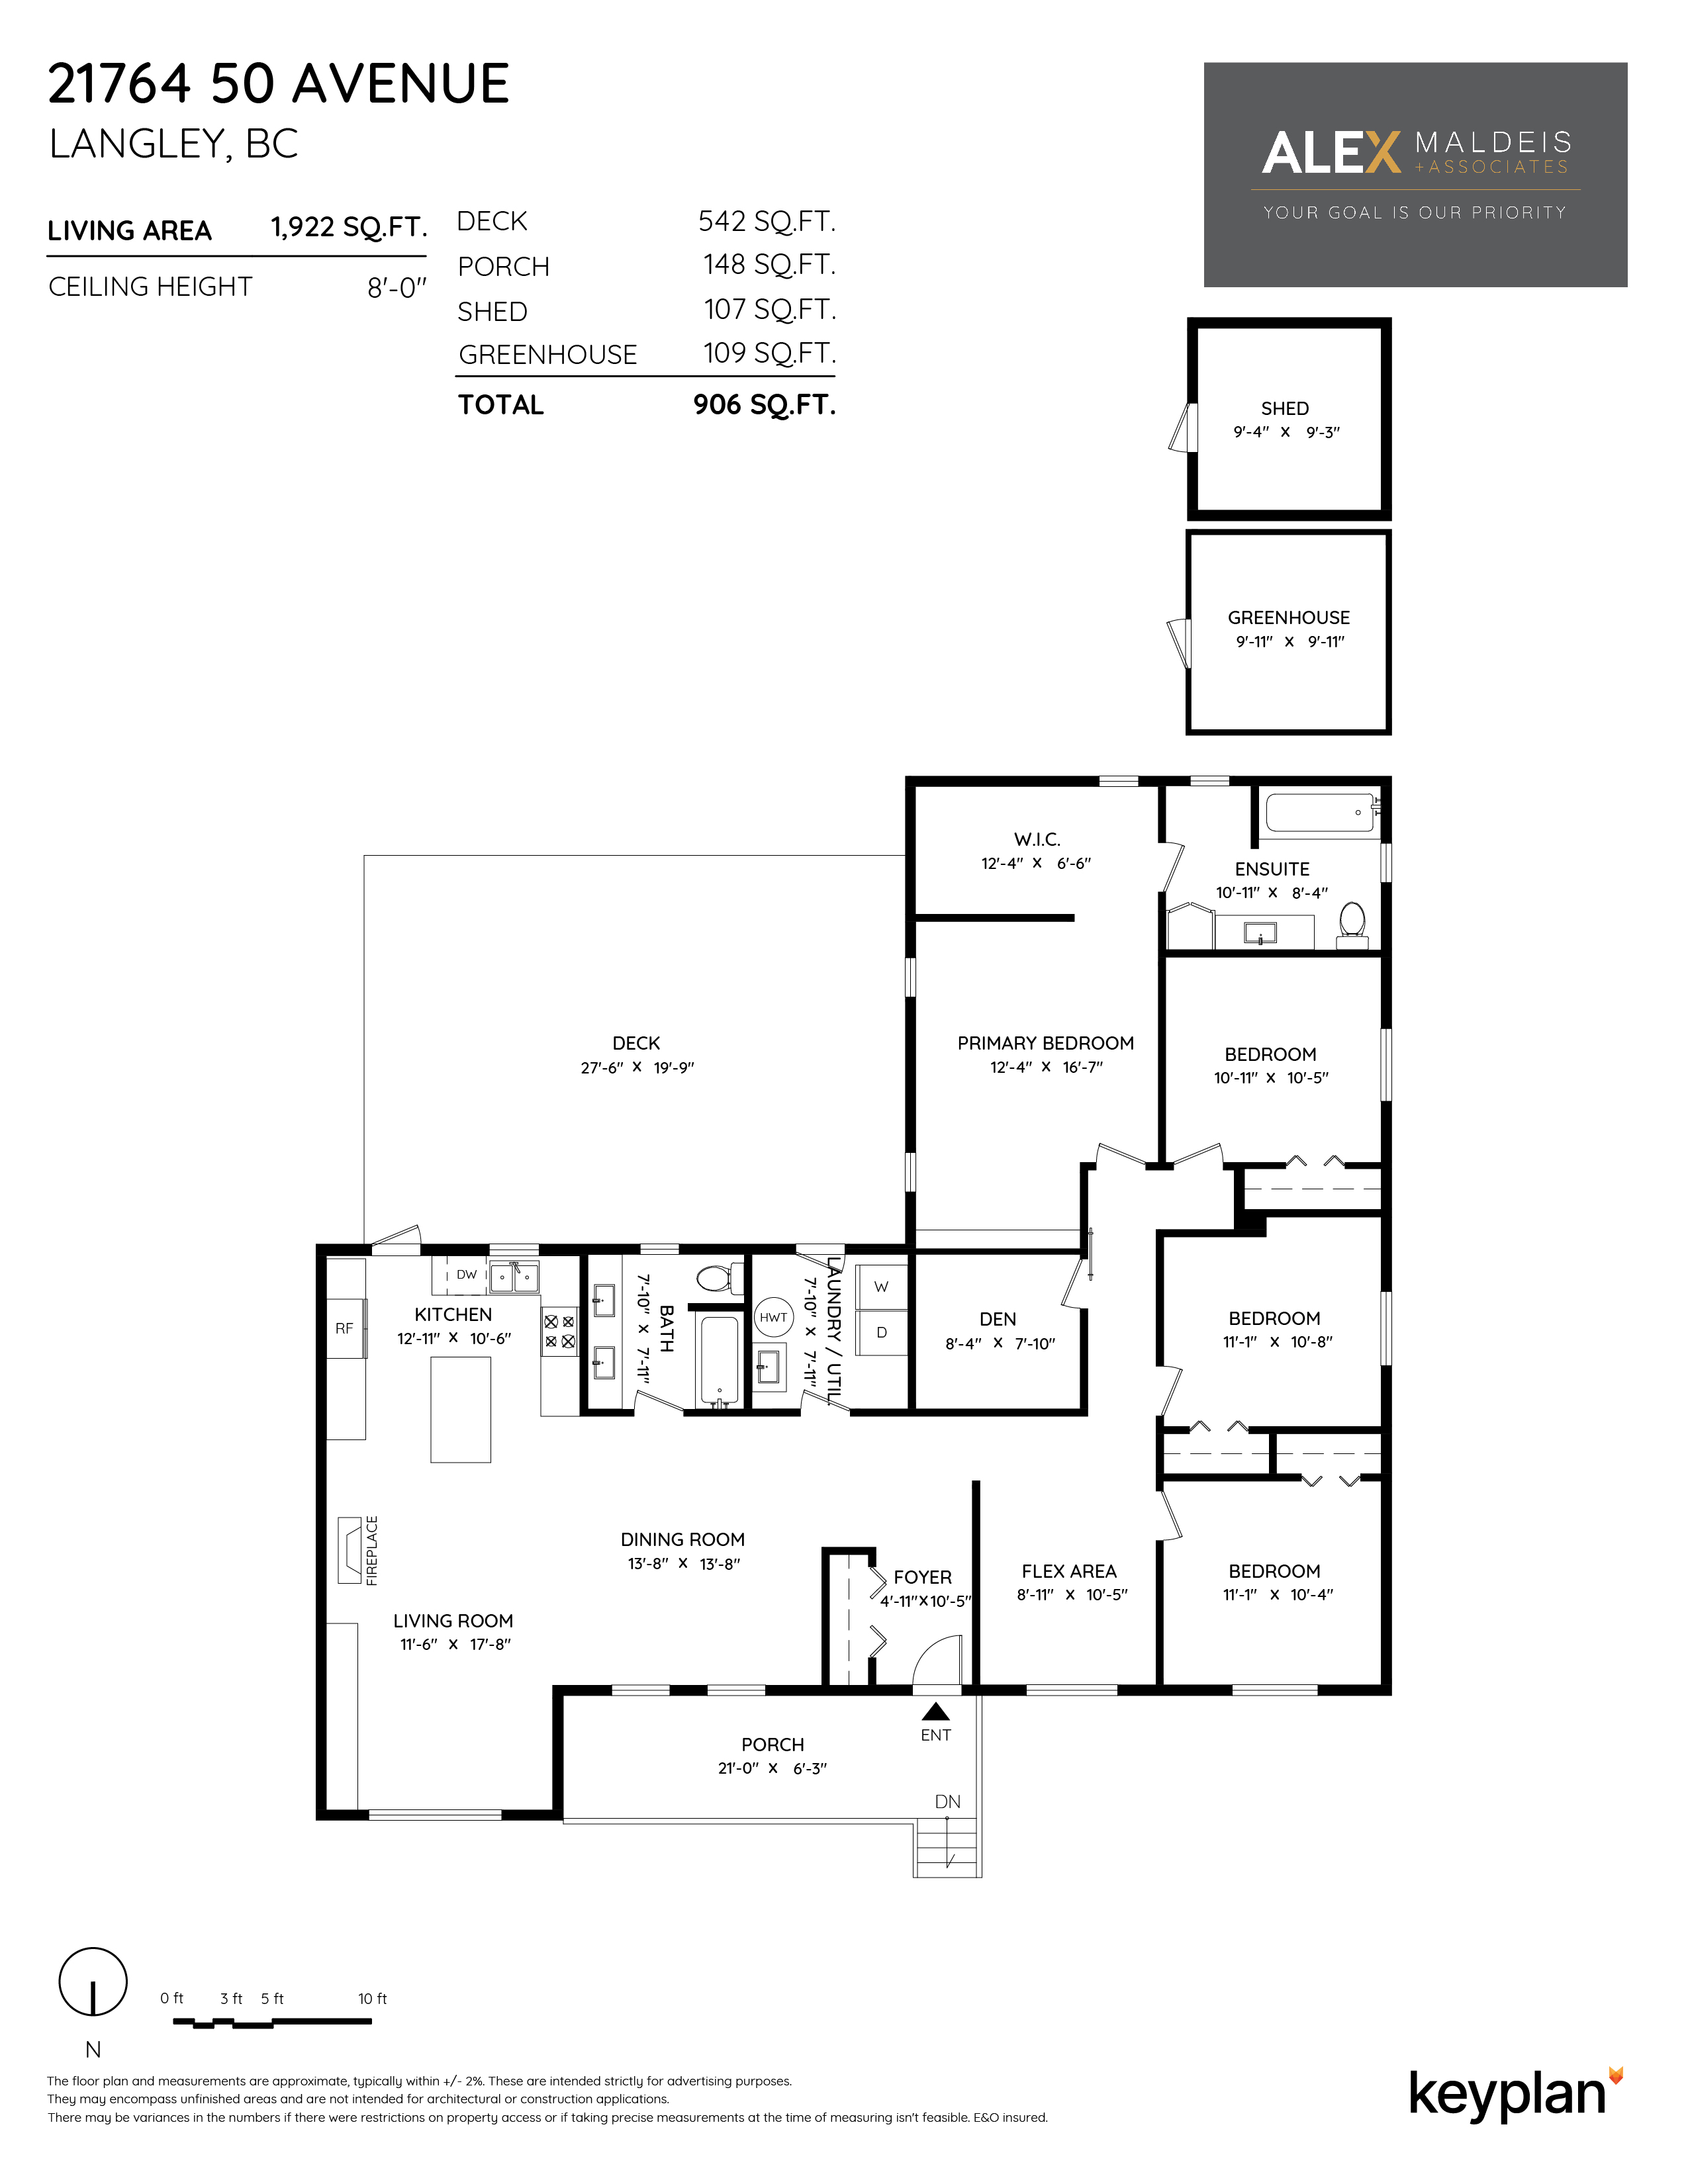 Alex Maldeis - 21764 50 Avenue, Langley, BC, Canada | Floor Plan 1